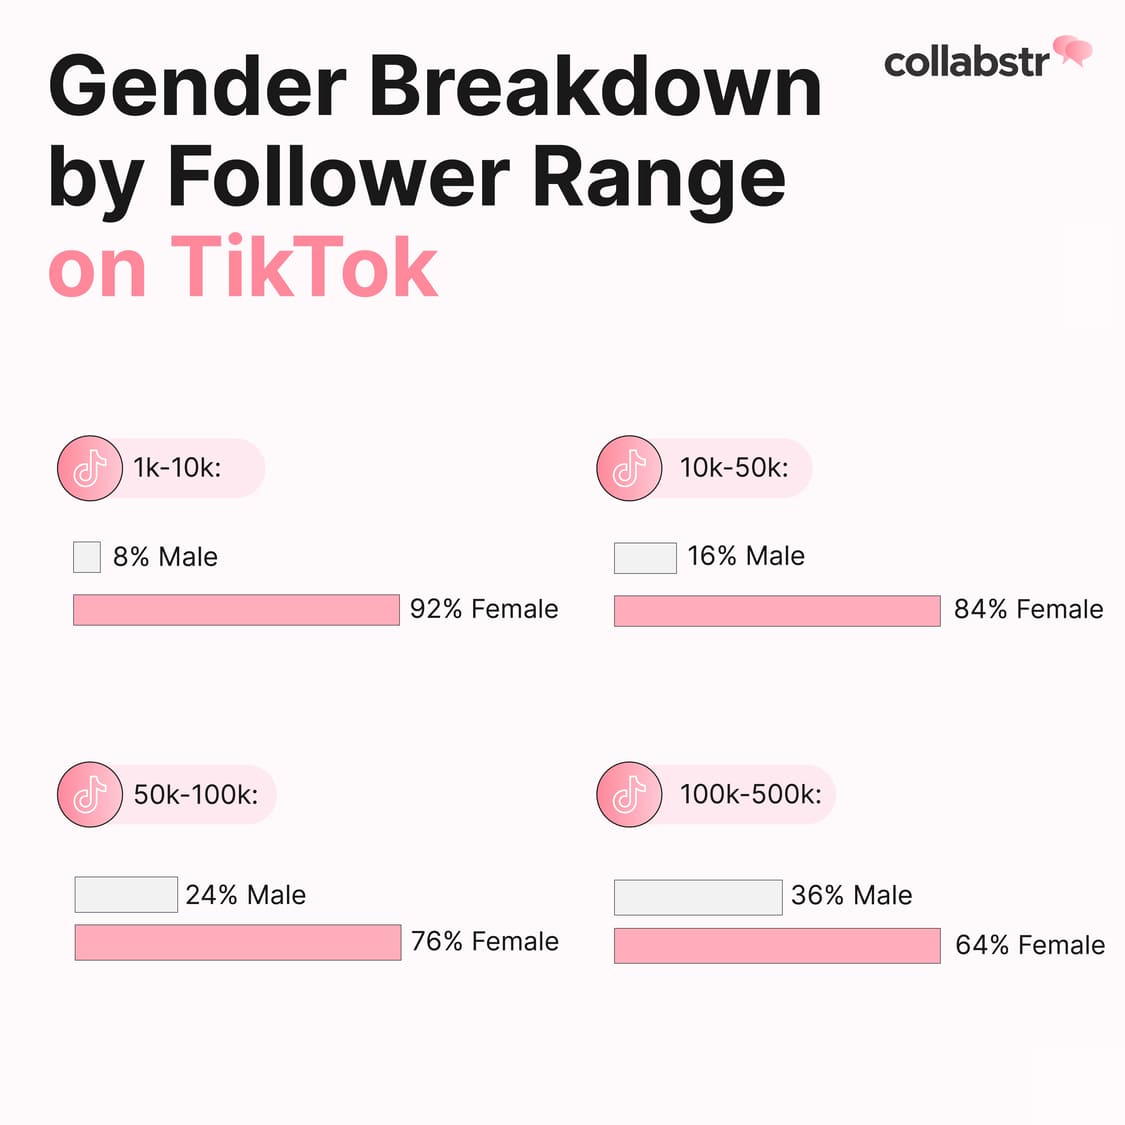 Gender breakdown of influencers on TikTok by follower range.